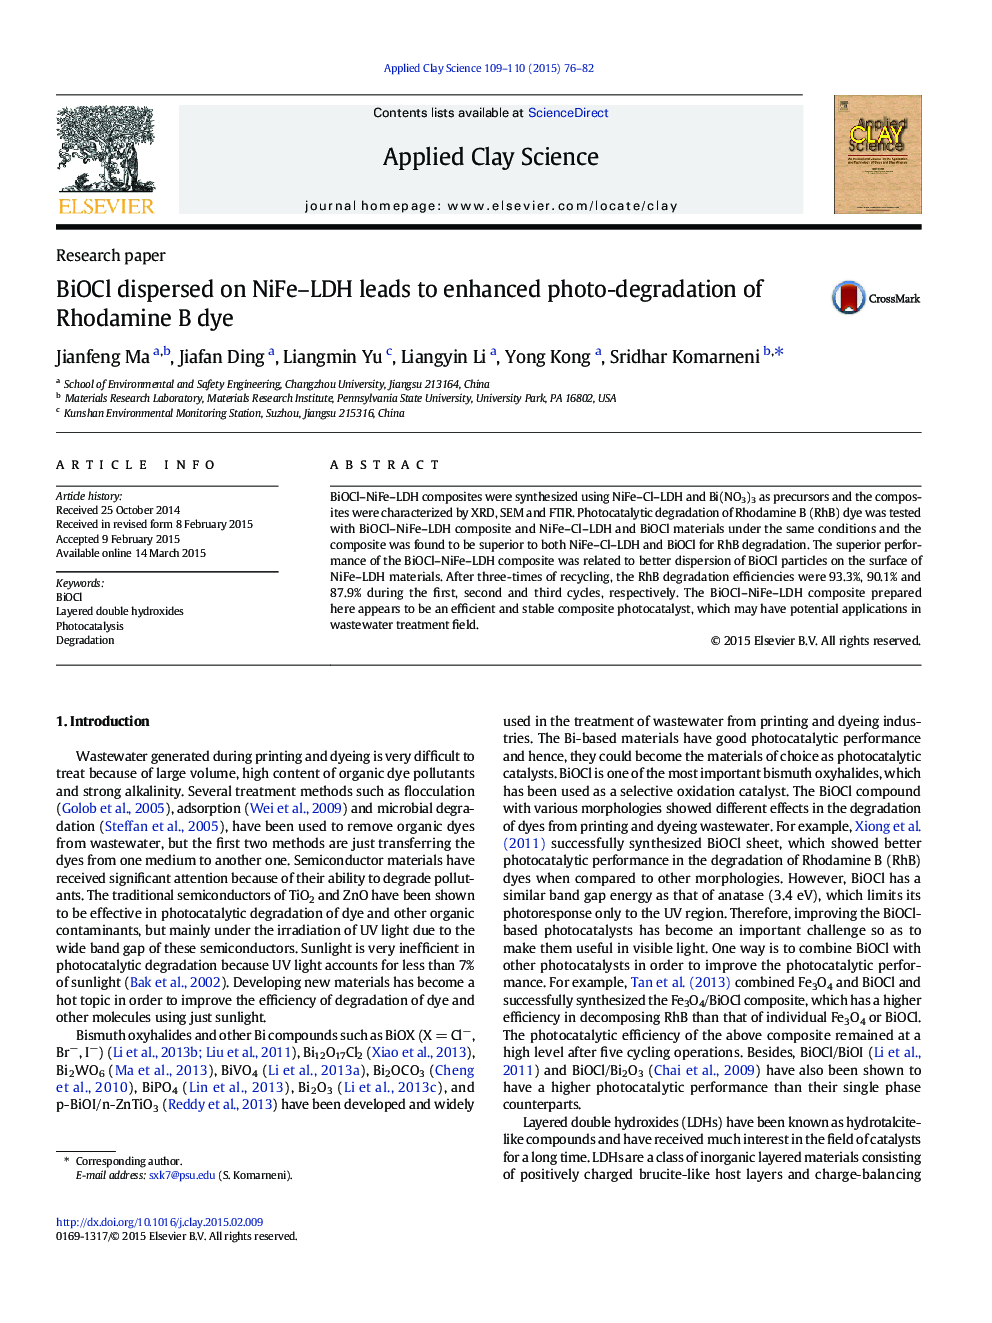 BiOCl dispersed on NiFe–LDH leads to enhanced photo-degradation of Rhodamine B dye